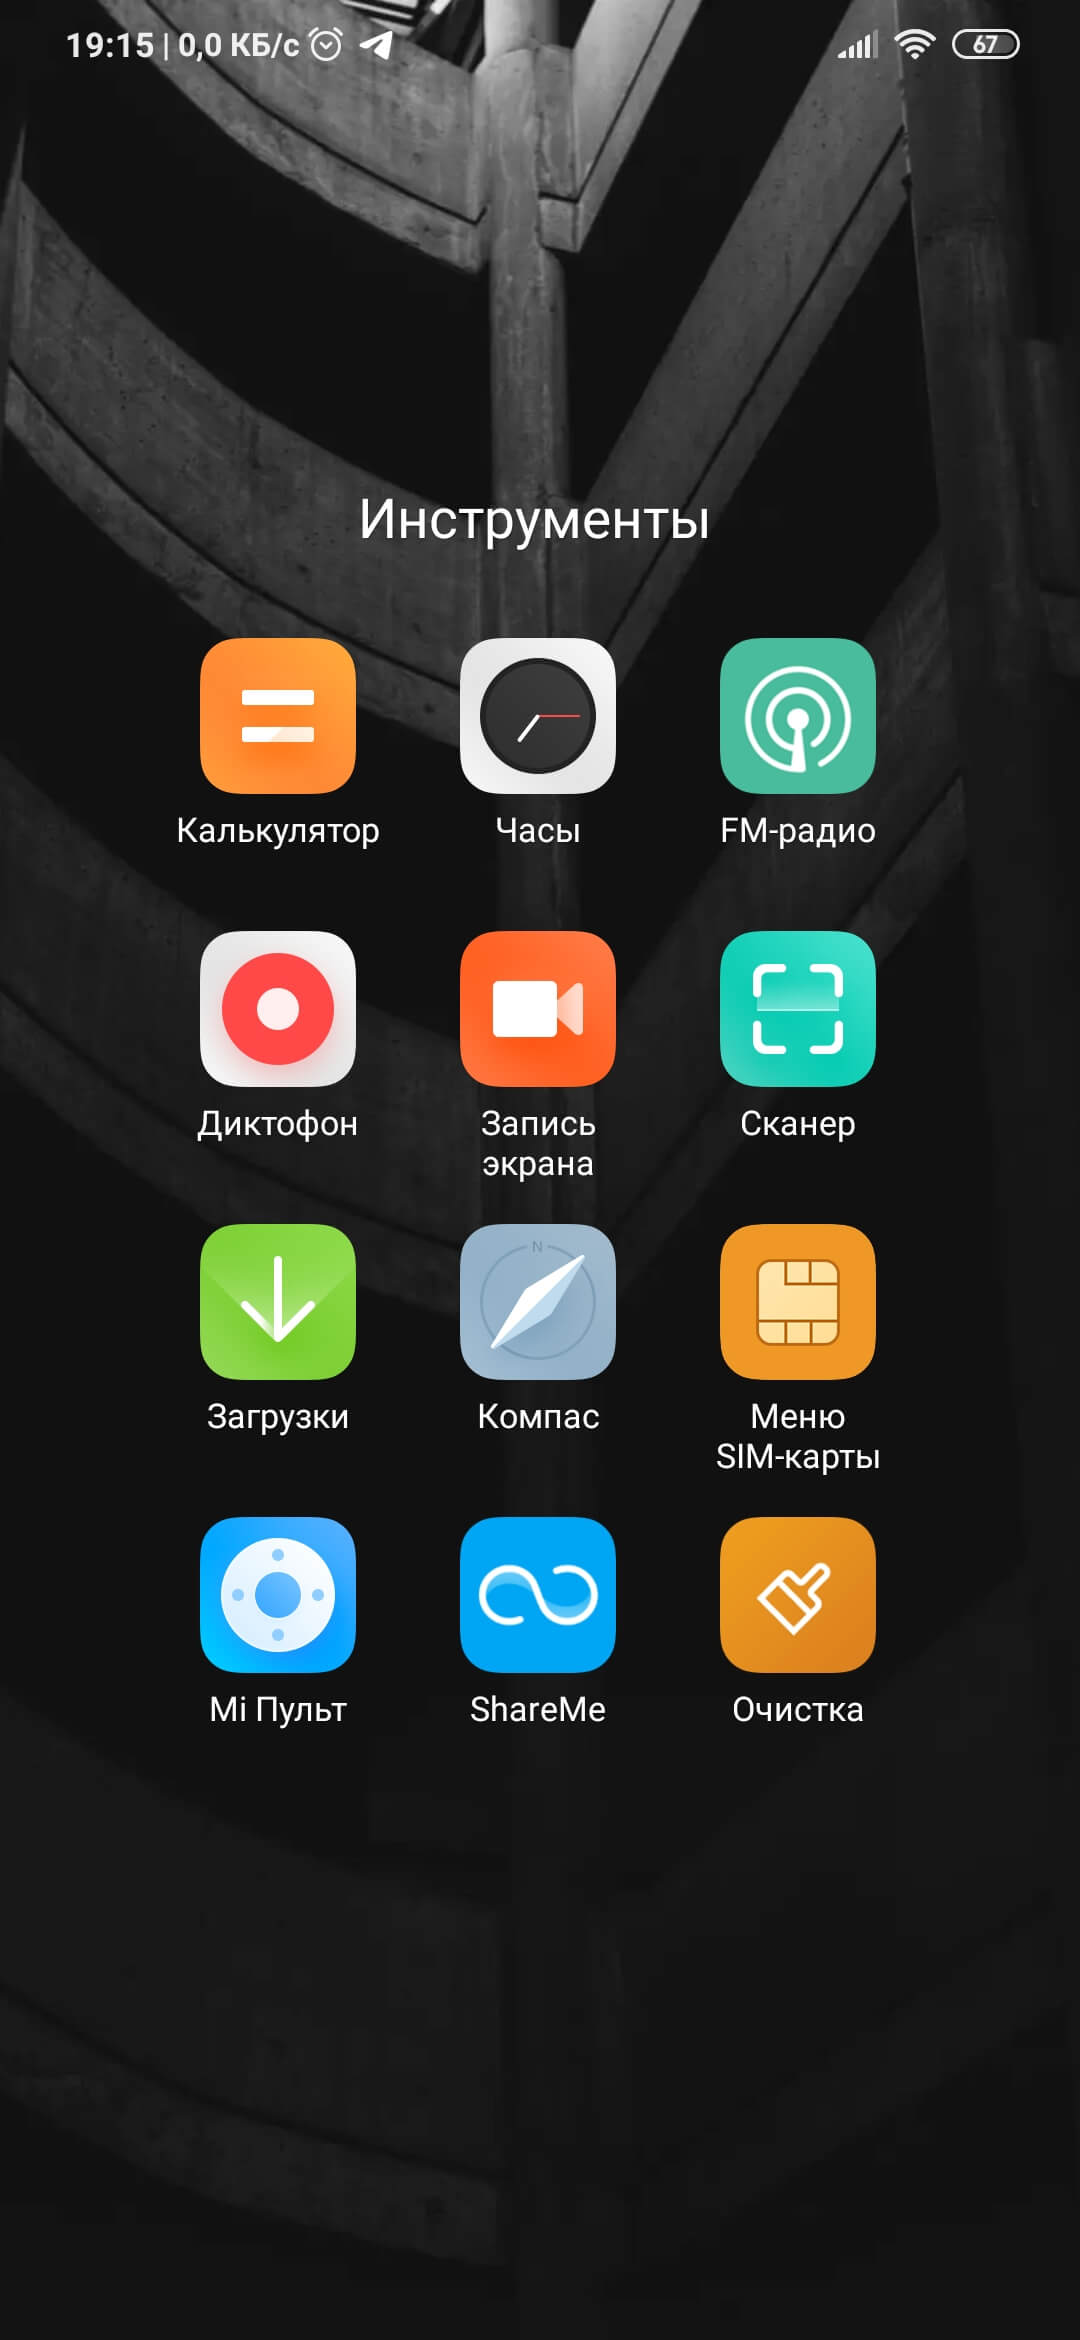  Обзор Xiaomi Mi 9 Lite: младшая модель со своими особенностями Xiaomi  - xiaomi_mi_9_lite_mladshij_brat_s_unikalnoj_fishkoj_picture27_10